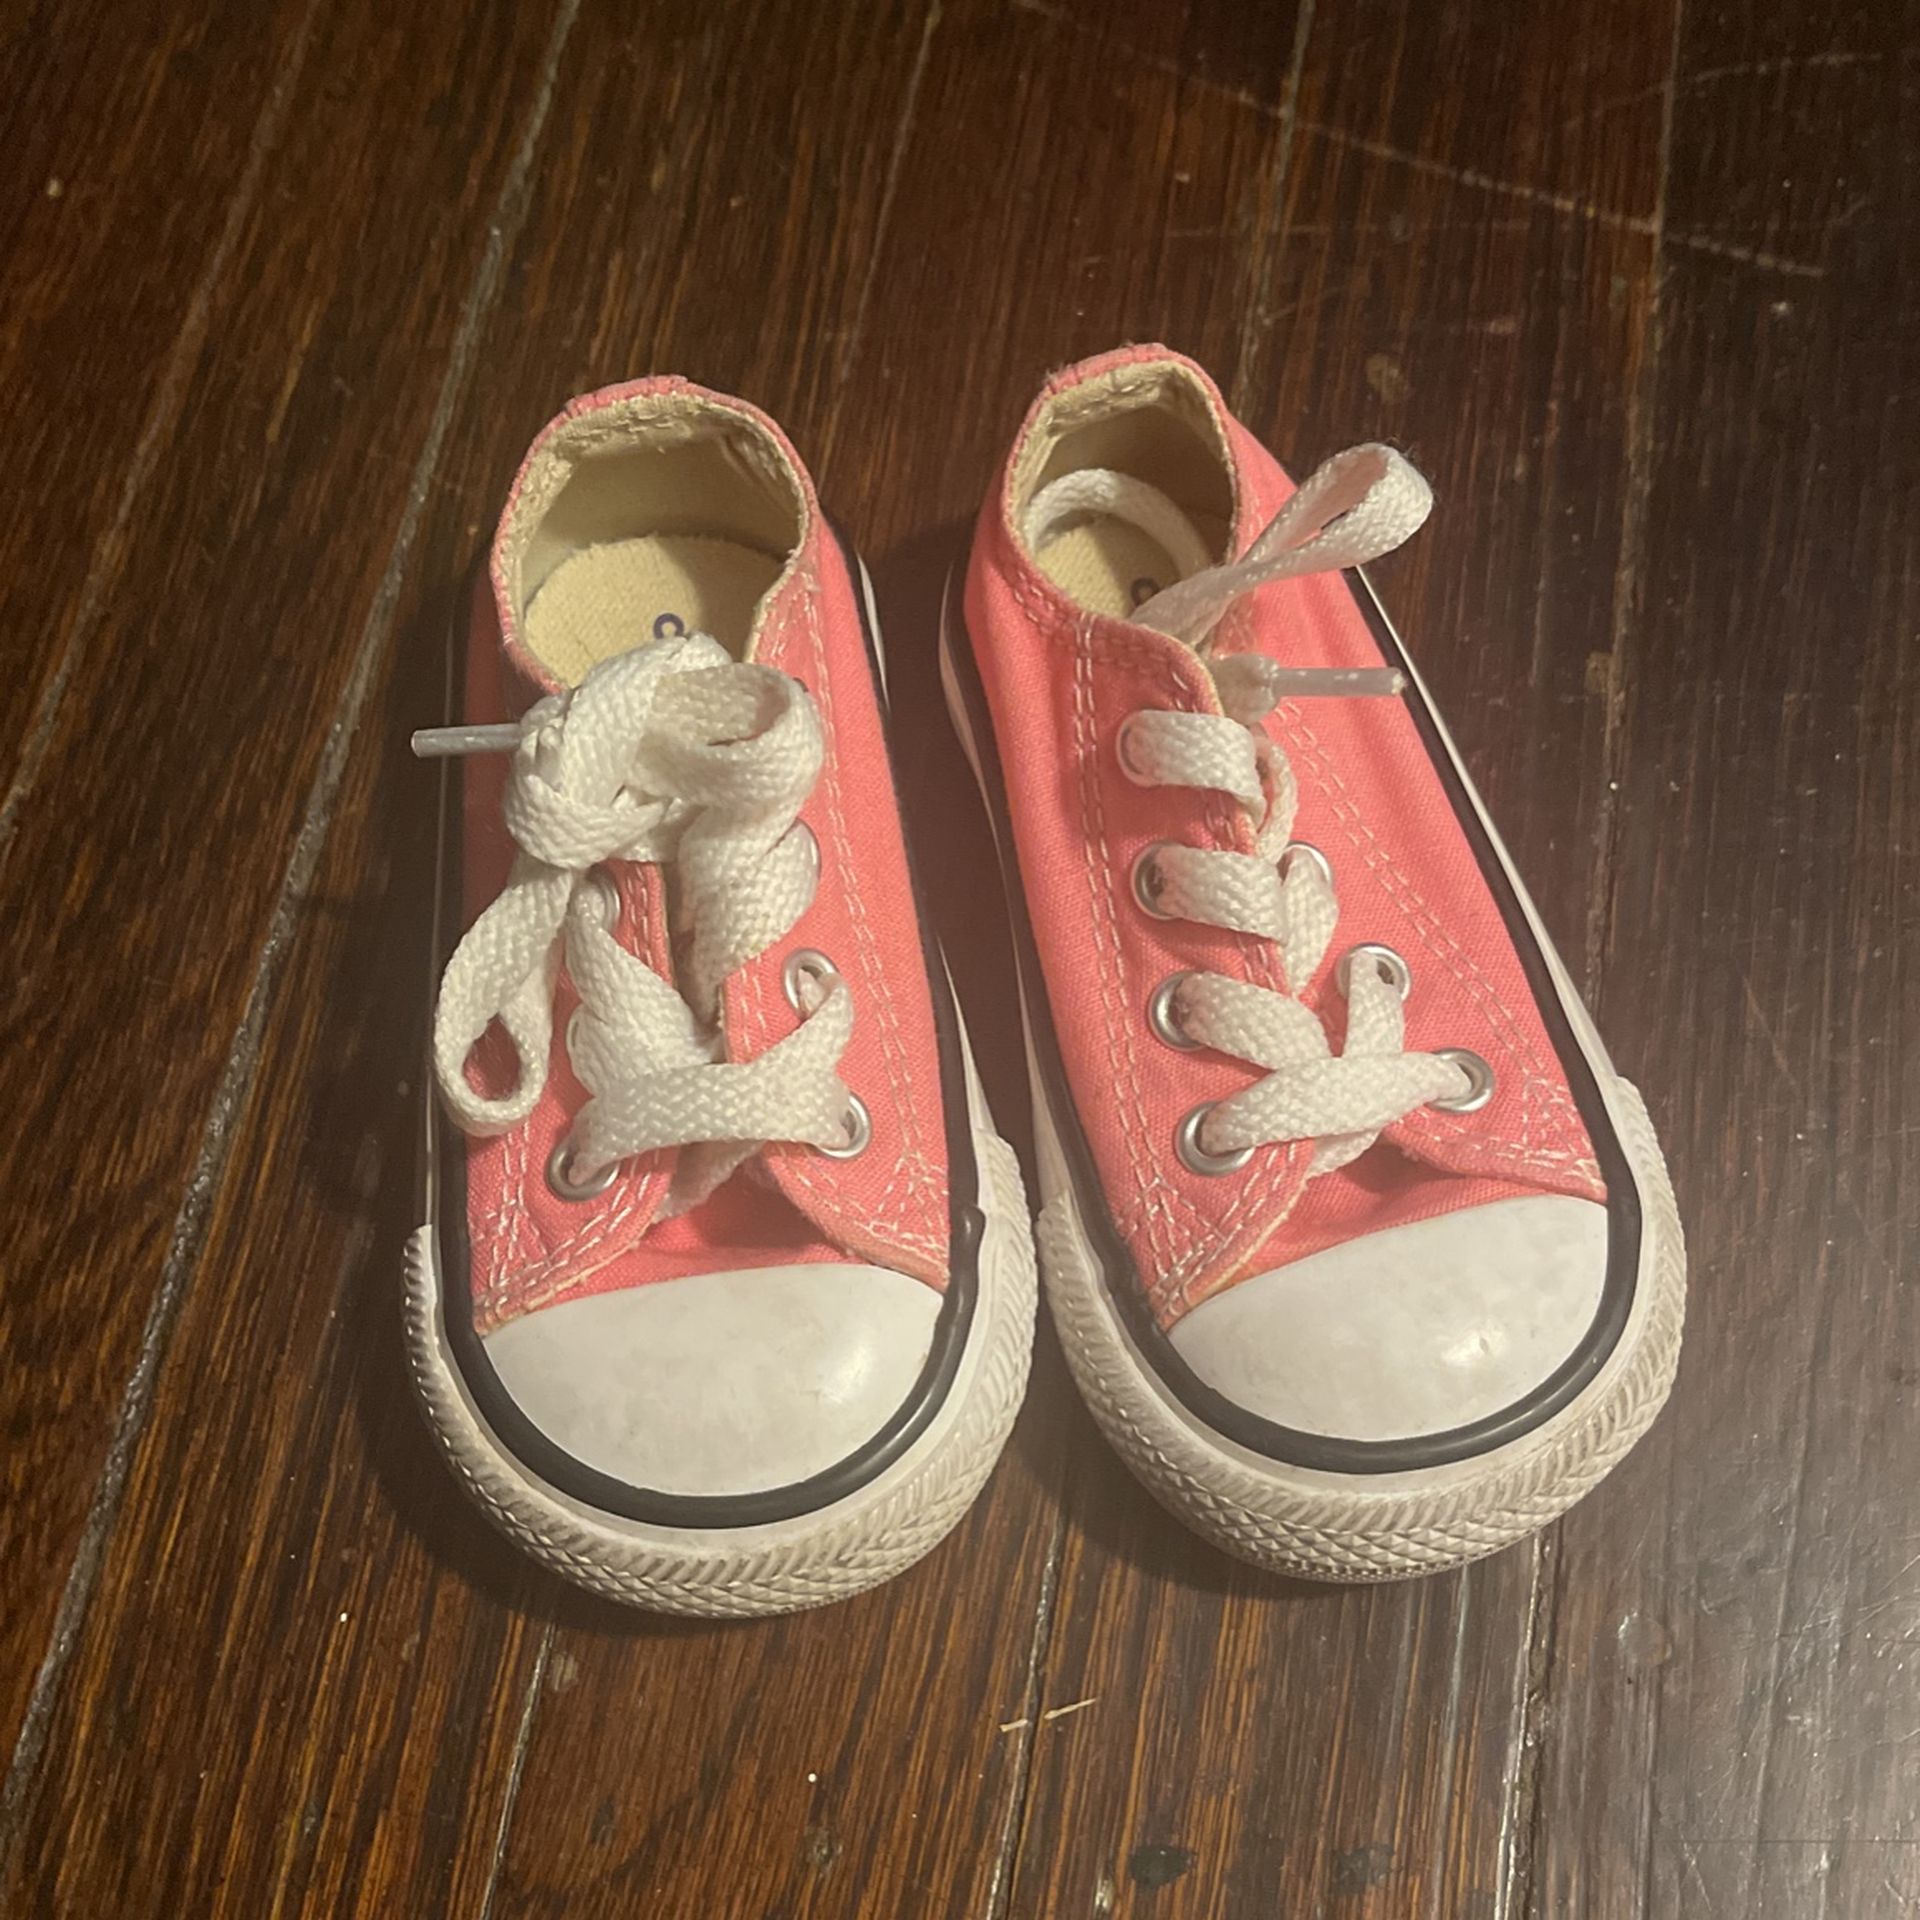 Toddler Converse